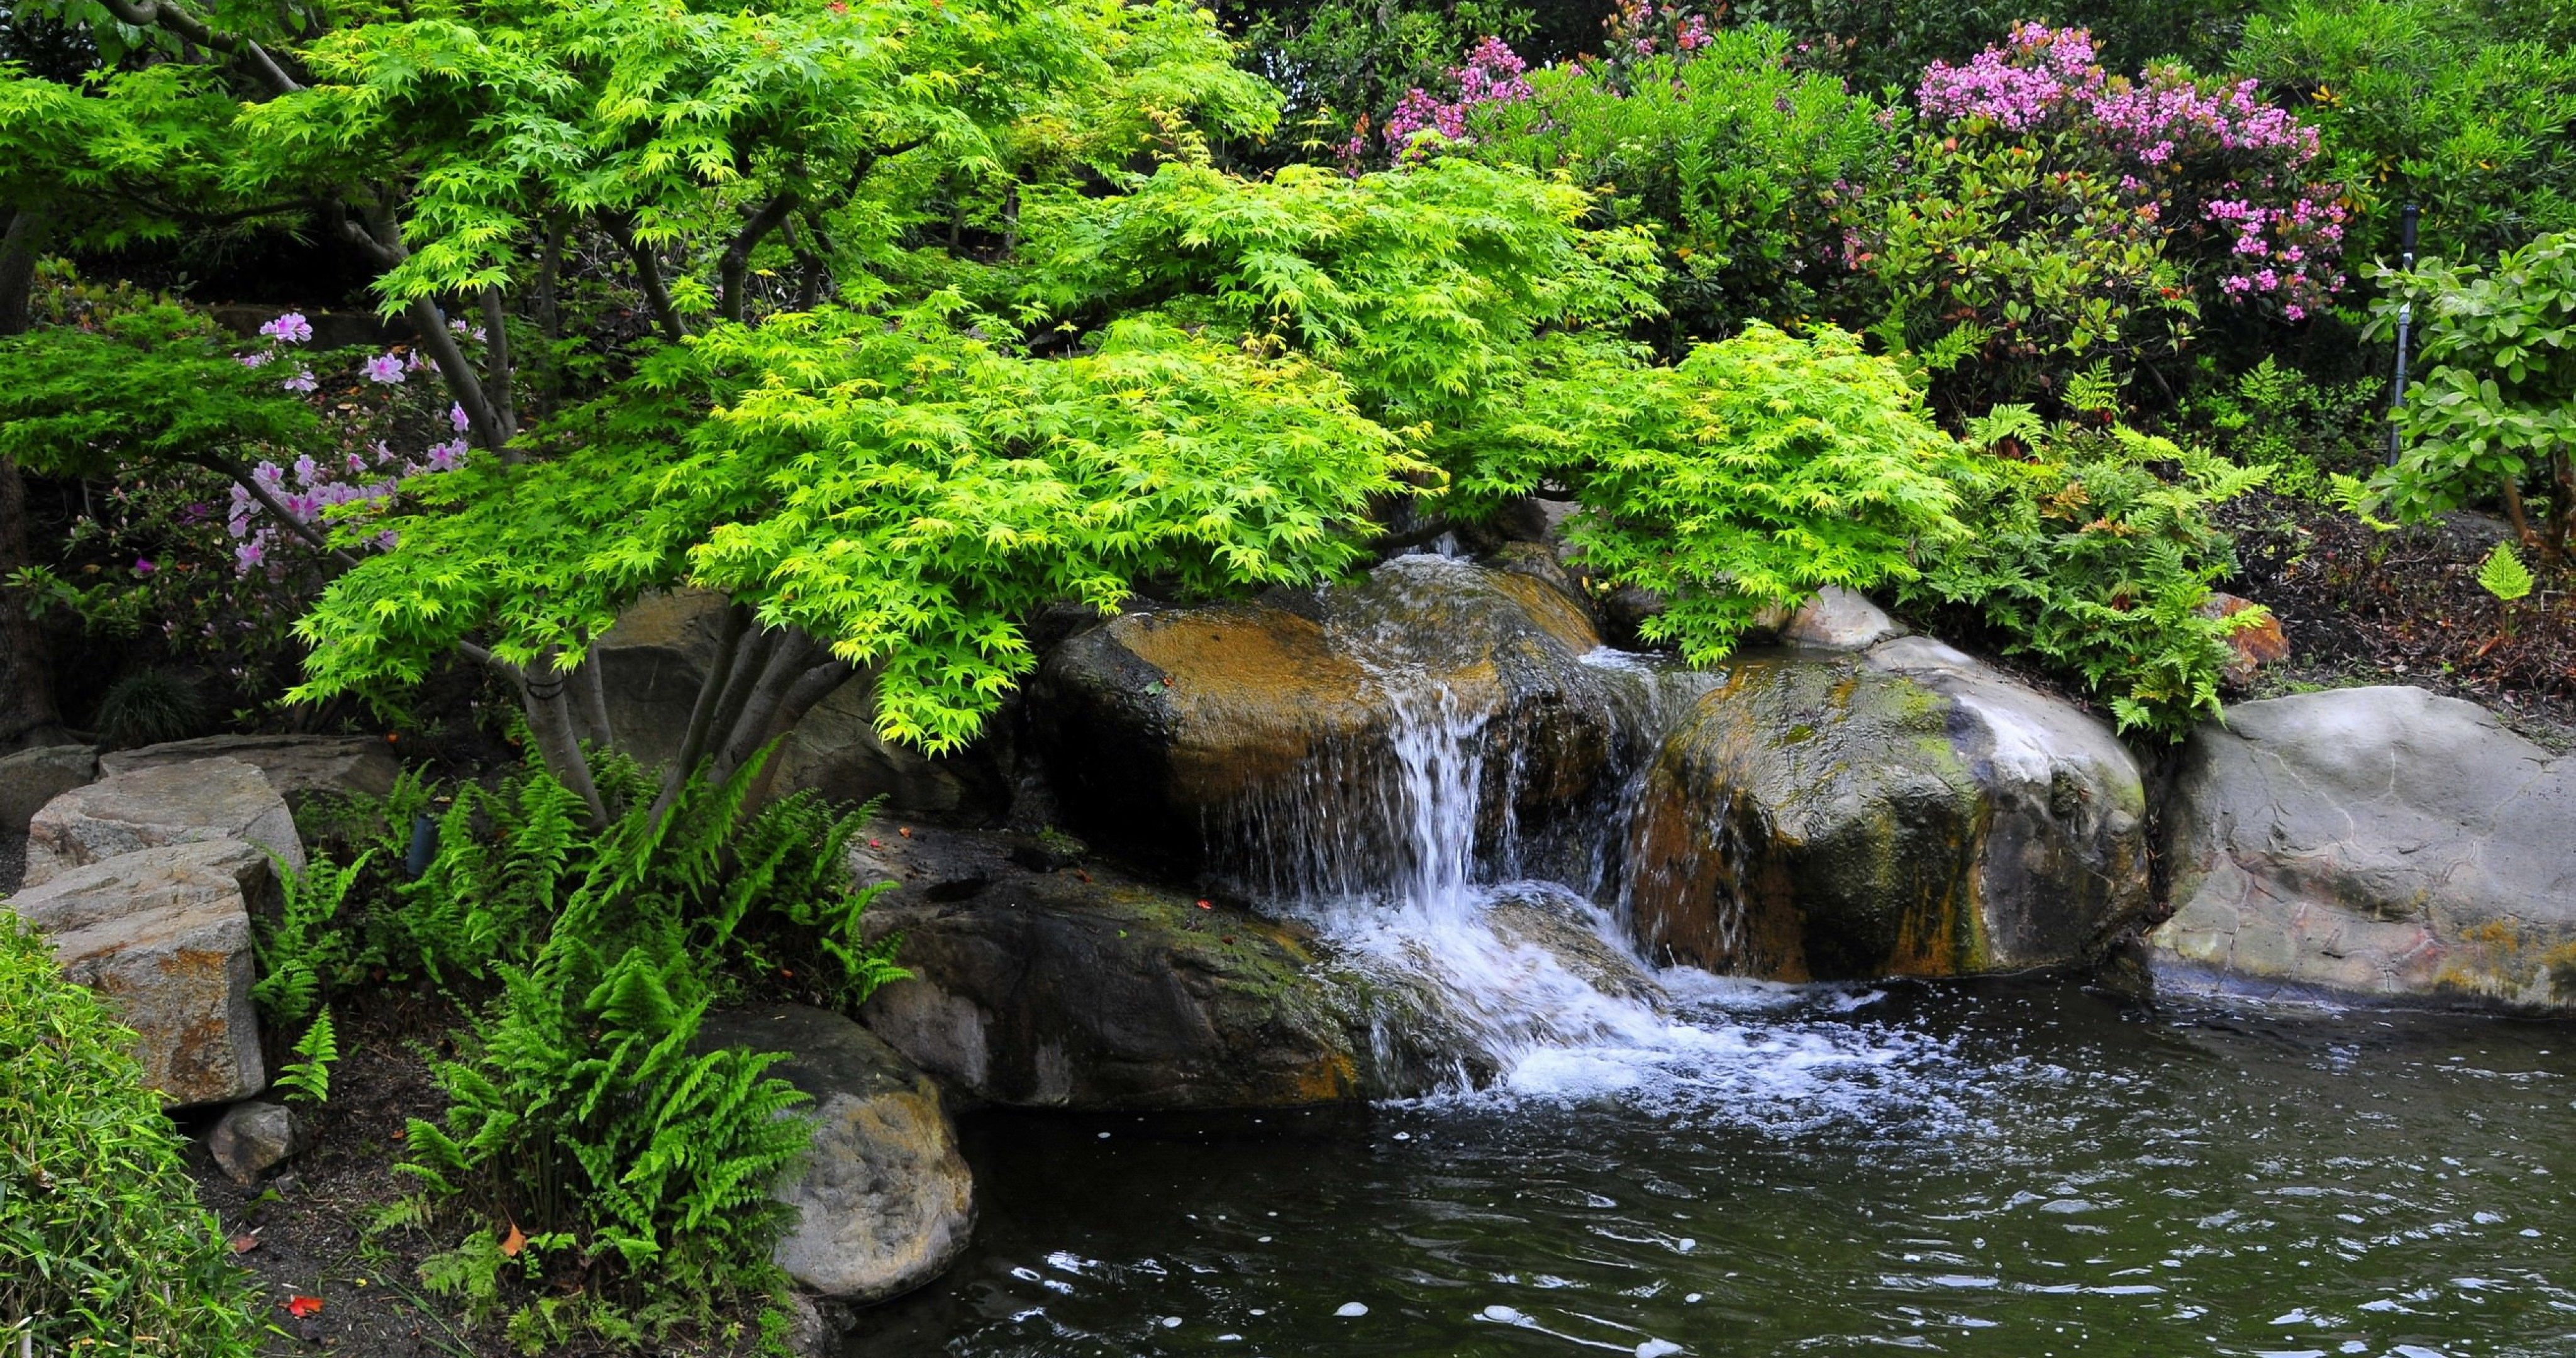 california miller japanese garden 4k ultra HD wallpaper. Pool water features, Pool waterfall landscaping, Pool waterfall